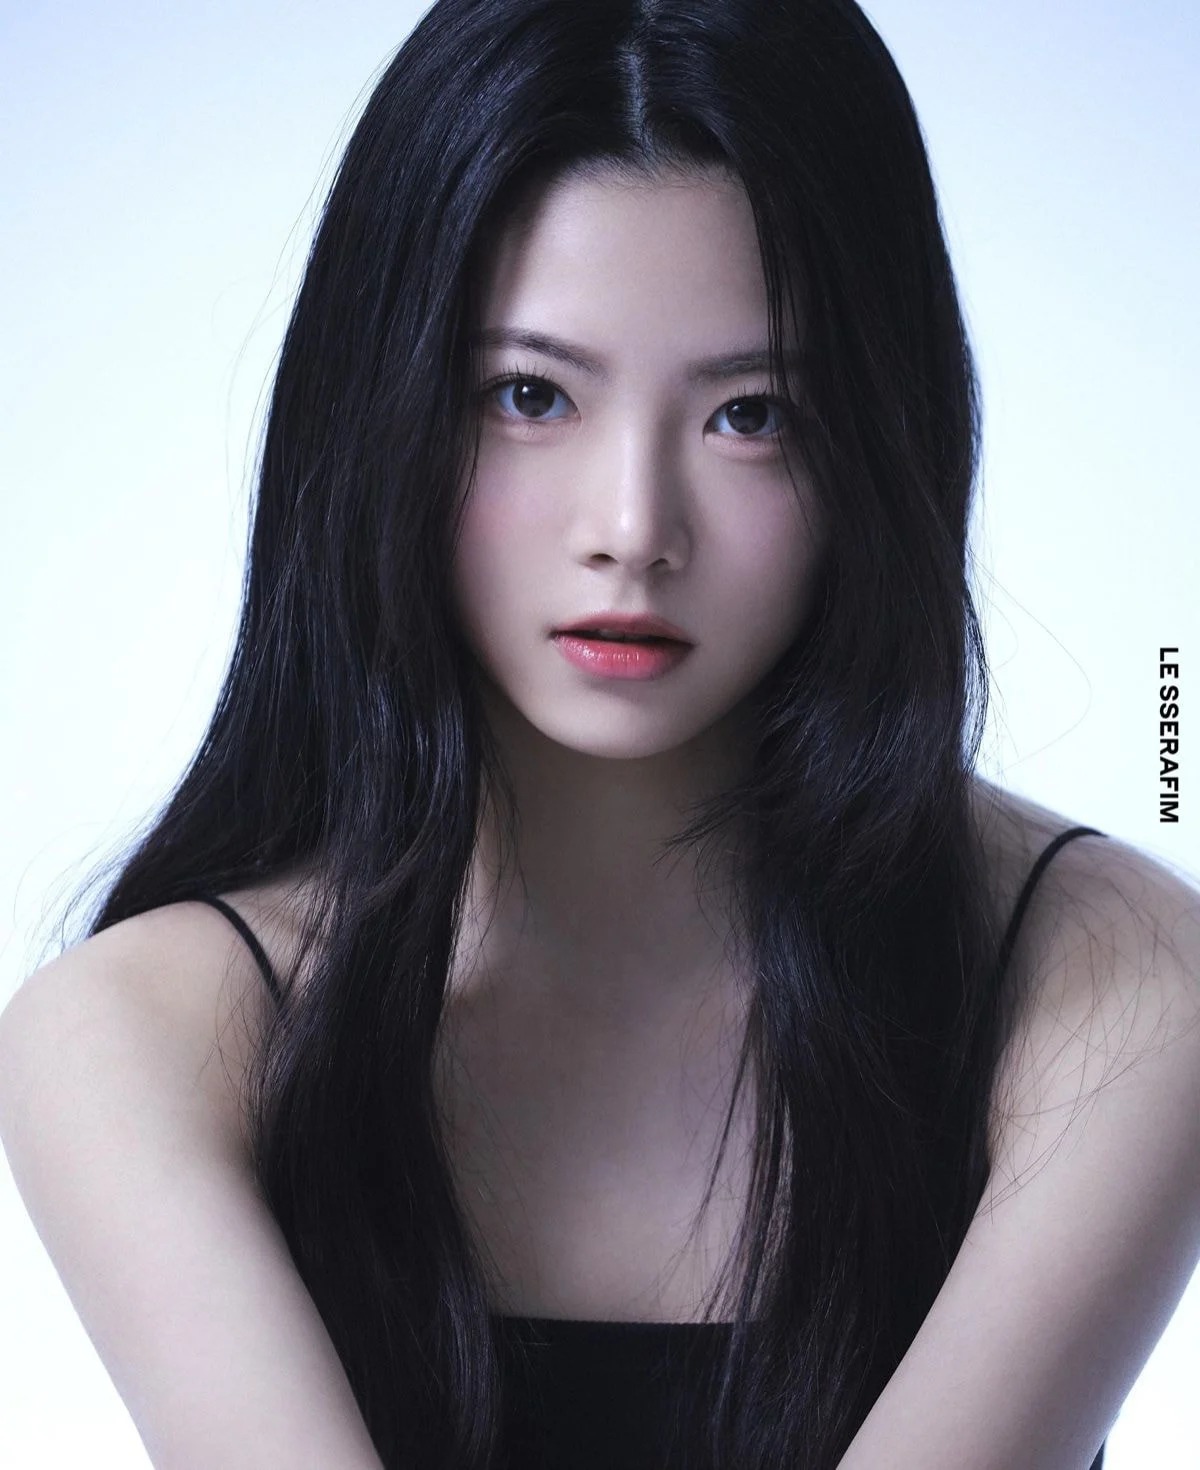 Hong EunChae